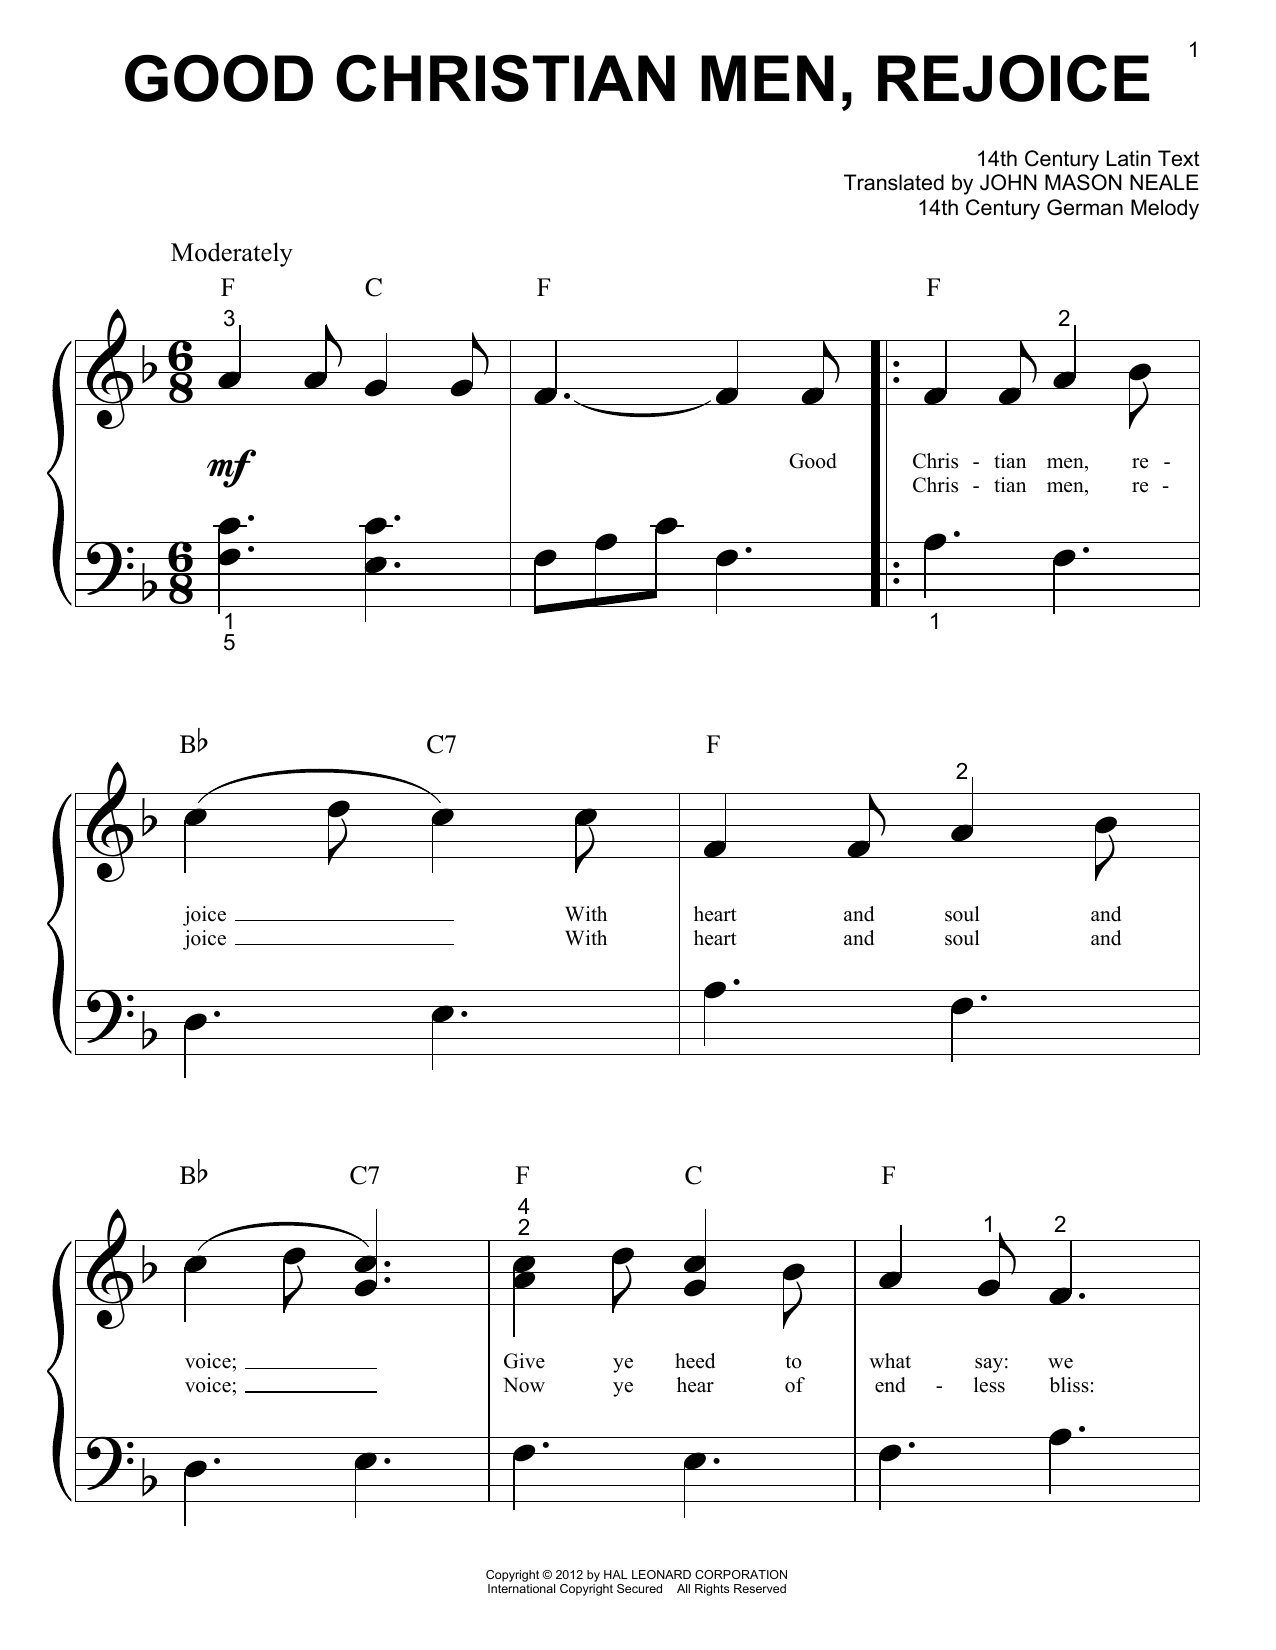 Christmas Carol Good Christian Men, Rejoice Sheet Music Notes & Chords for Super Easy Piano - Download or Print PDF